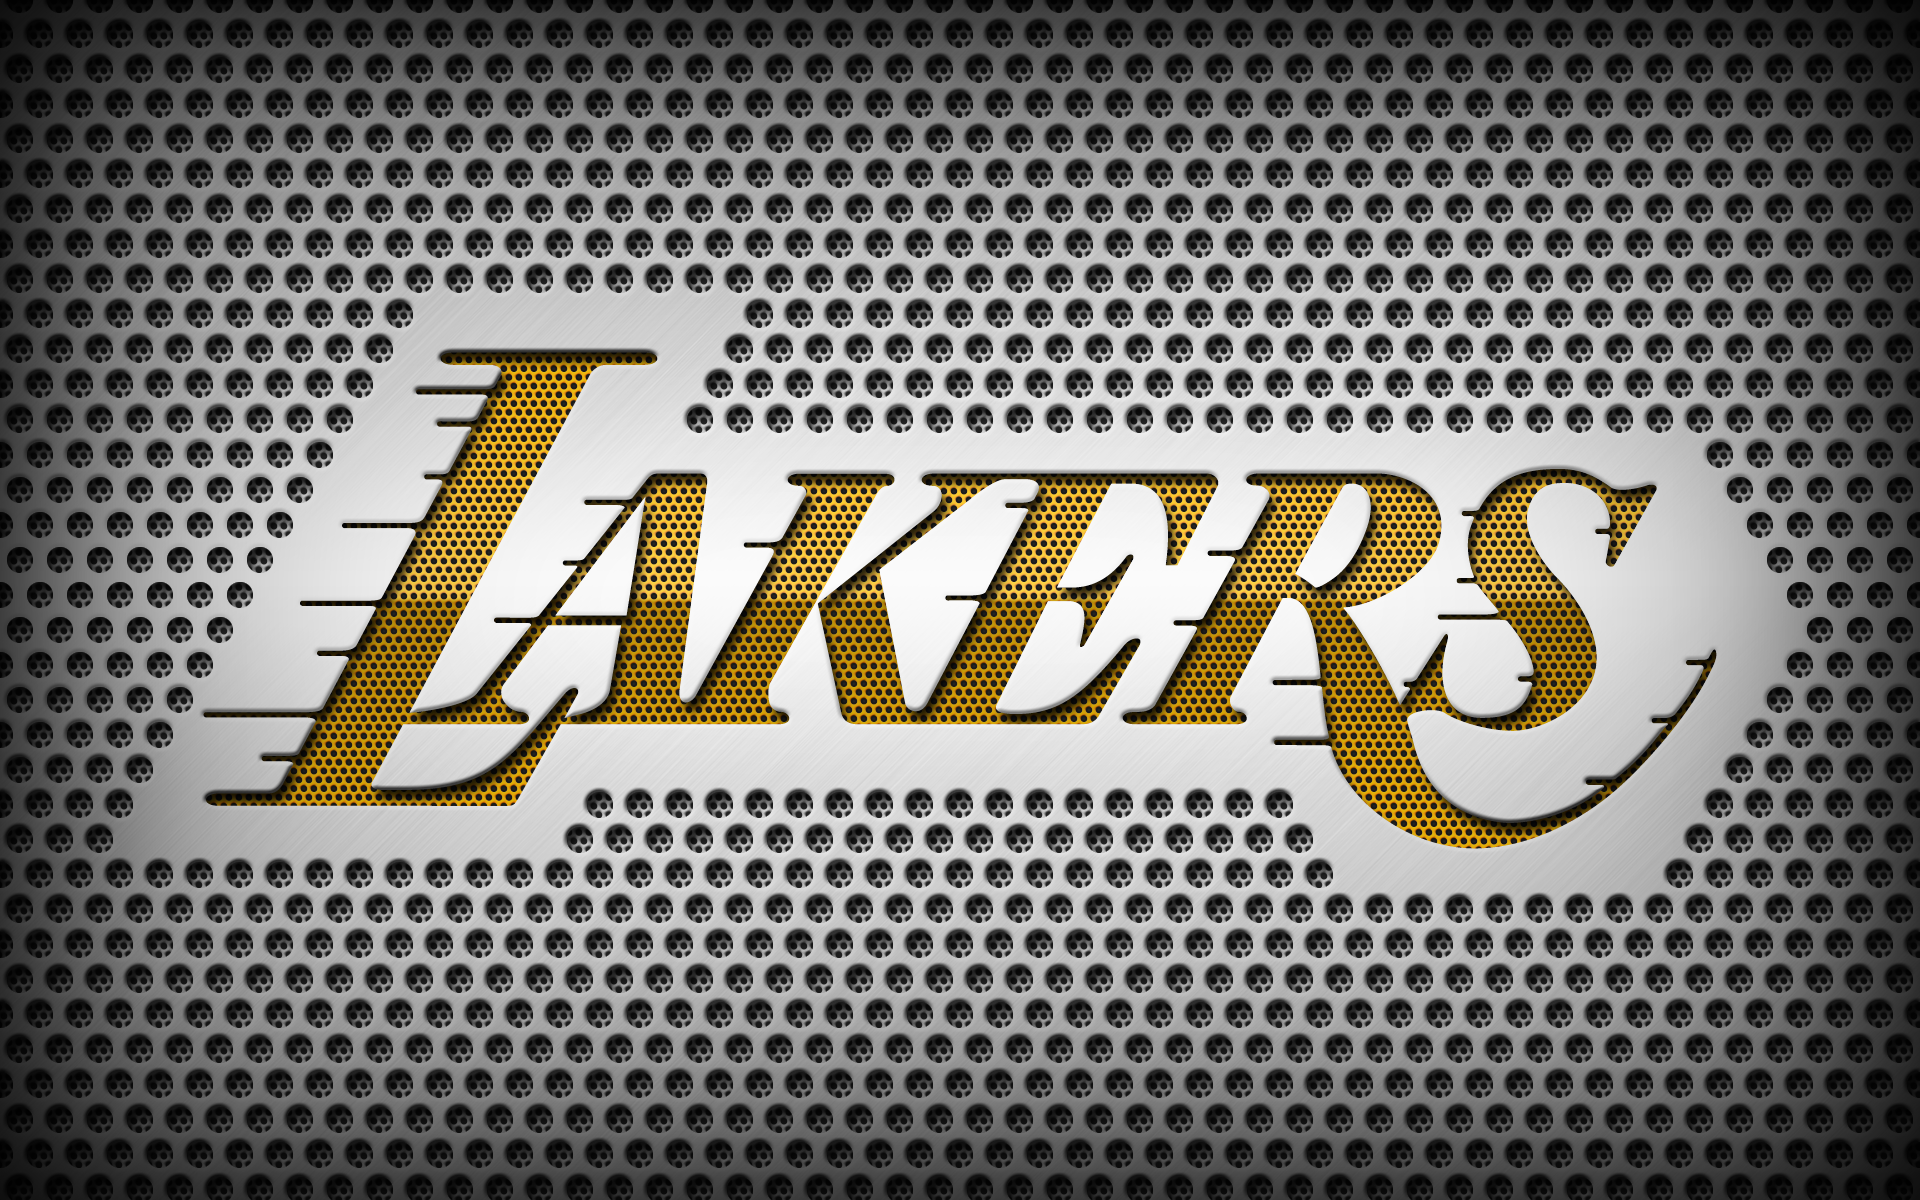 Download Kobe Bryant 24 Logo Basketball Lakers Wallpaper